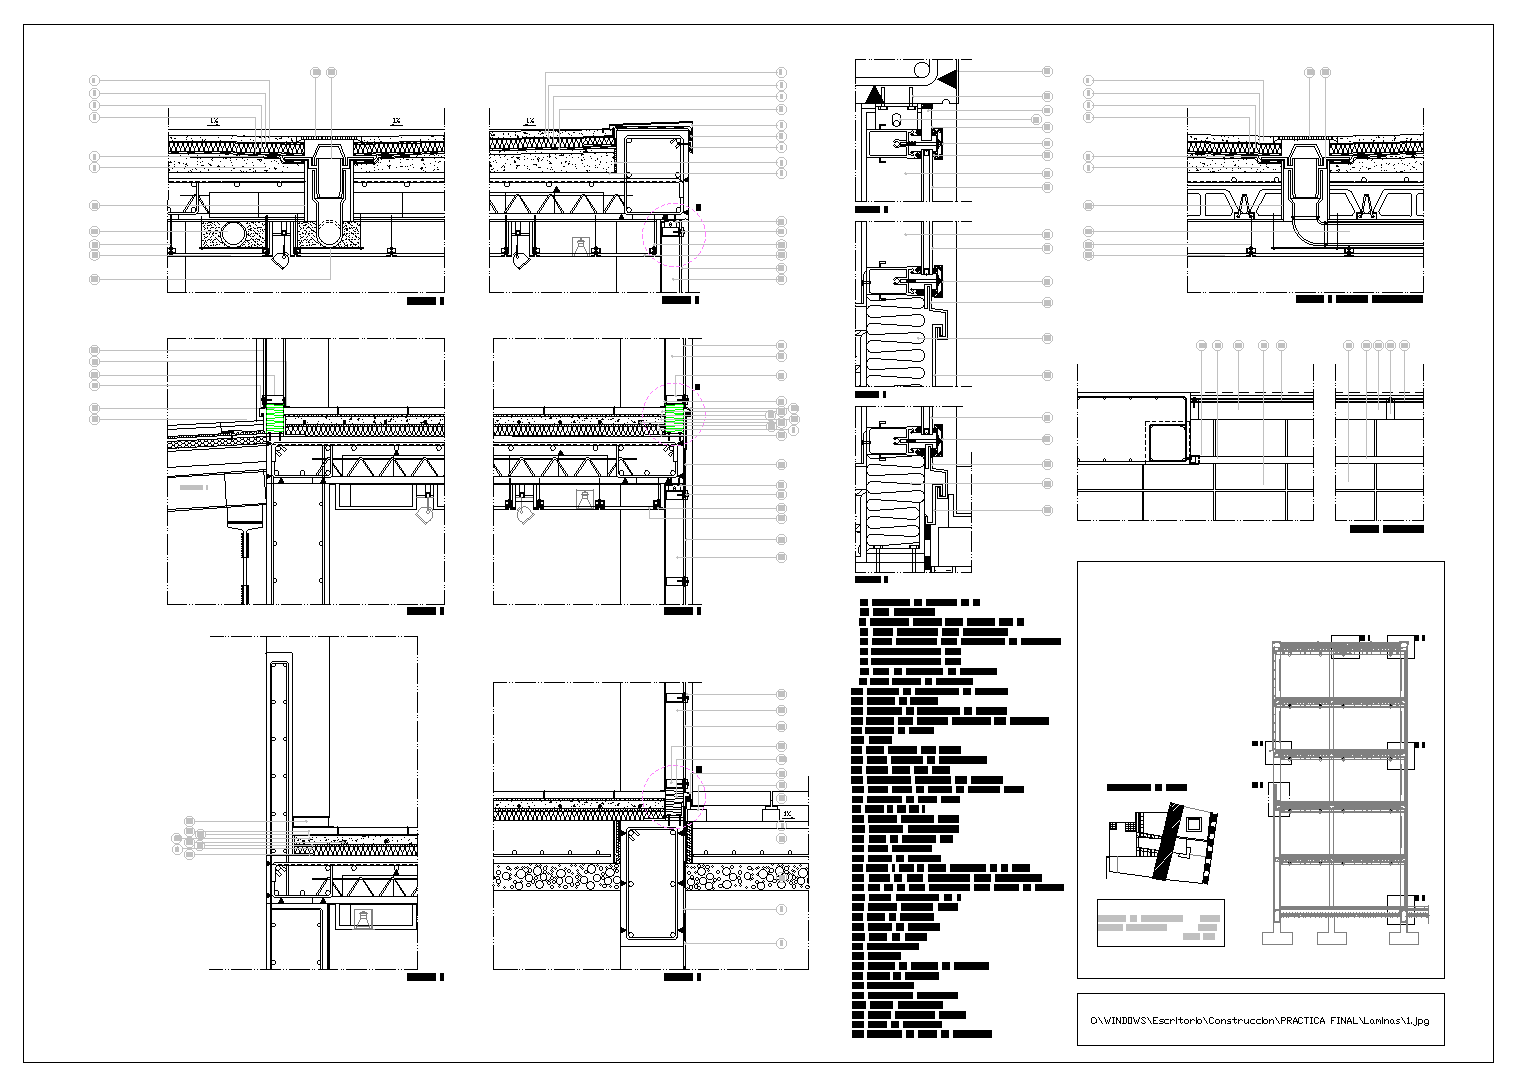 Building temporary expositions plan detail dwg file. - Cadbull